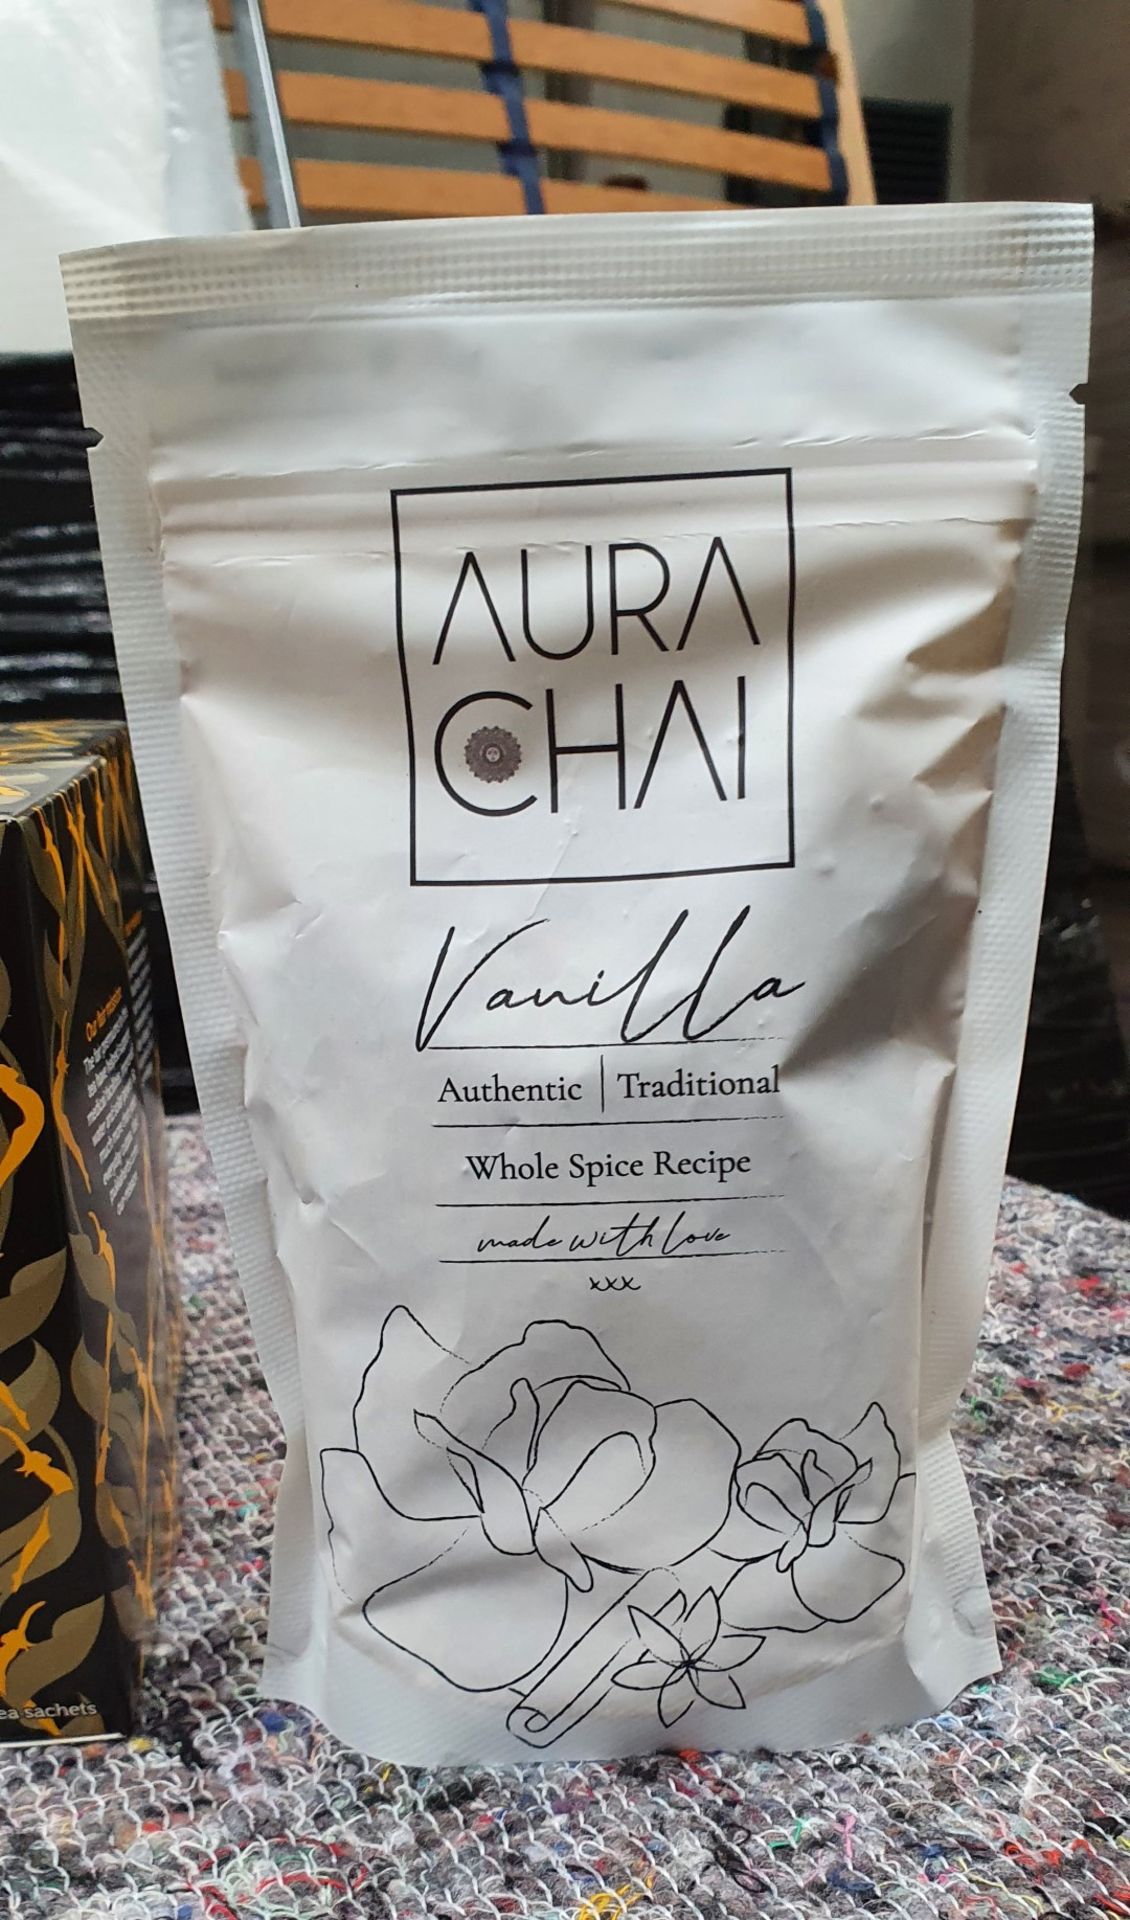 16 x Assorted Tea Products Including Pukka Organic Tea, Teapigs Tea and Aura Chai Tea - New - Image 4 of 10